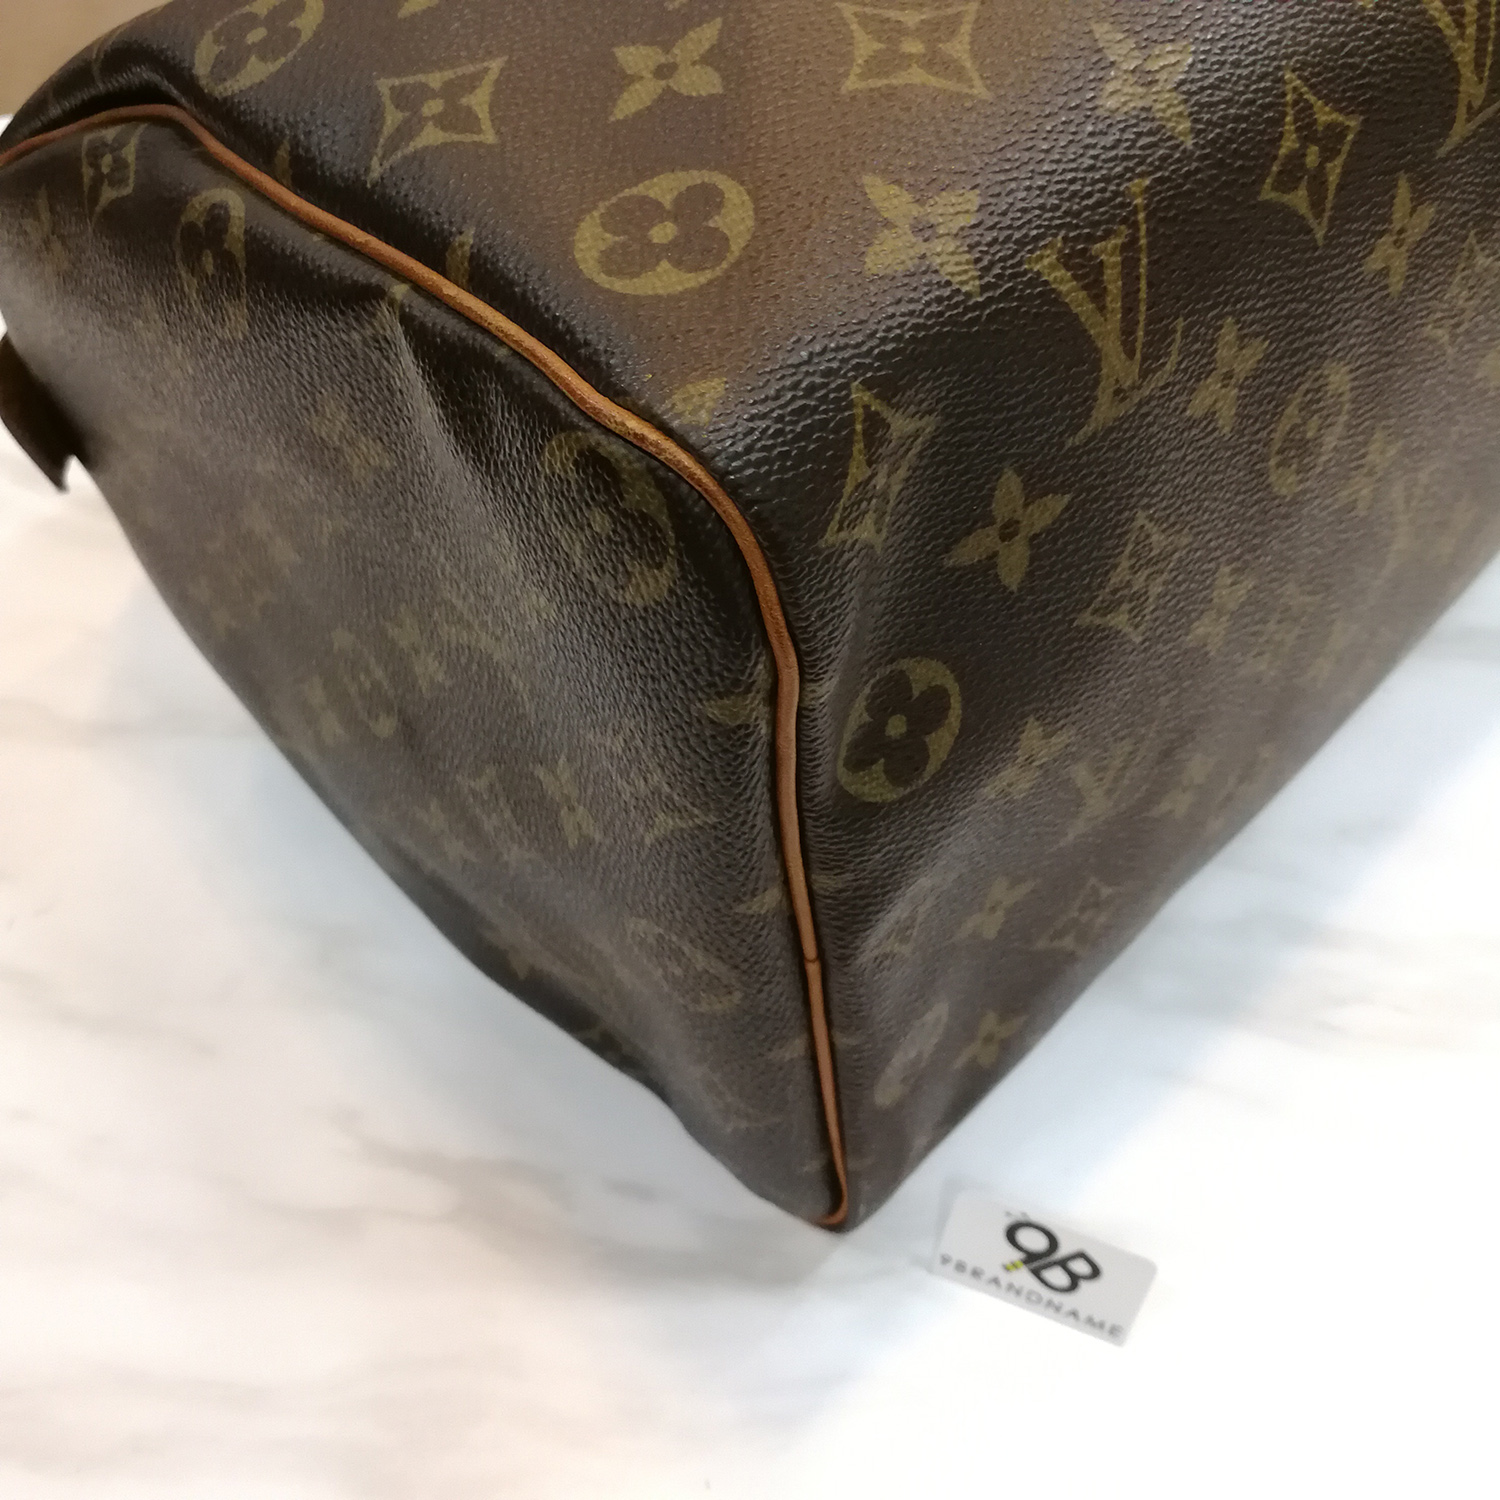 Used - Louis Vuitton Speedy Size 35 Monogram Canvas Handbag - 9brandname